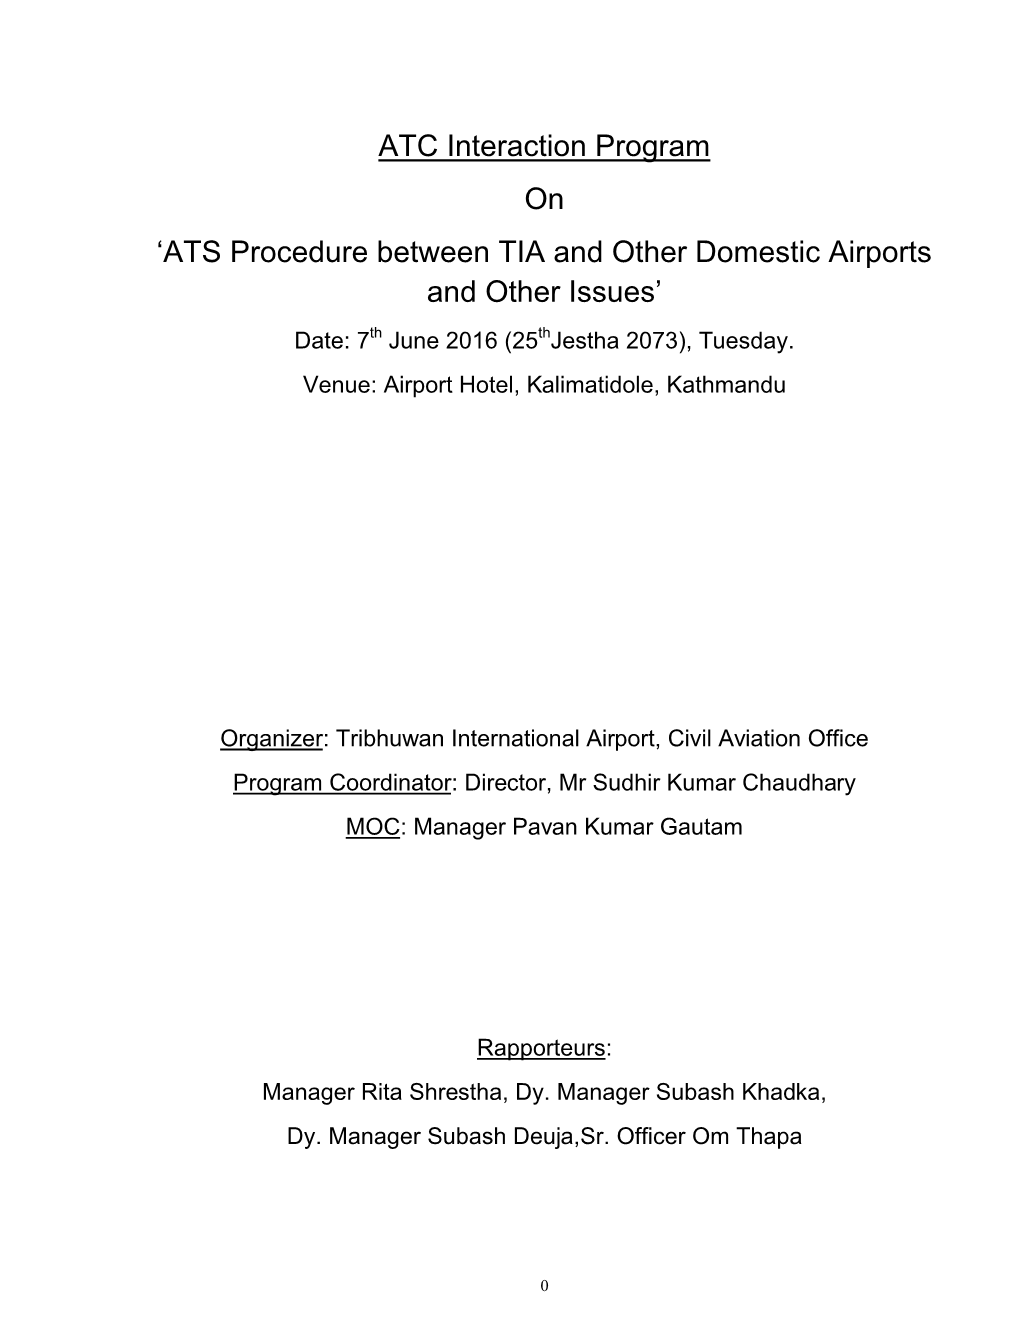 ATC Interaction Program on 'ATS